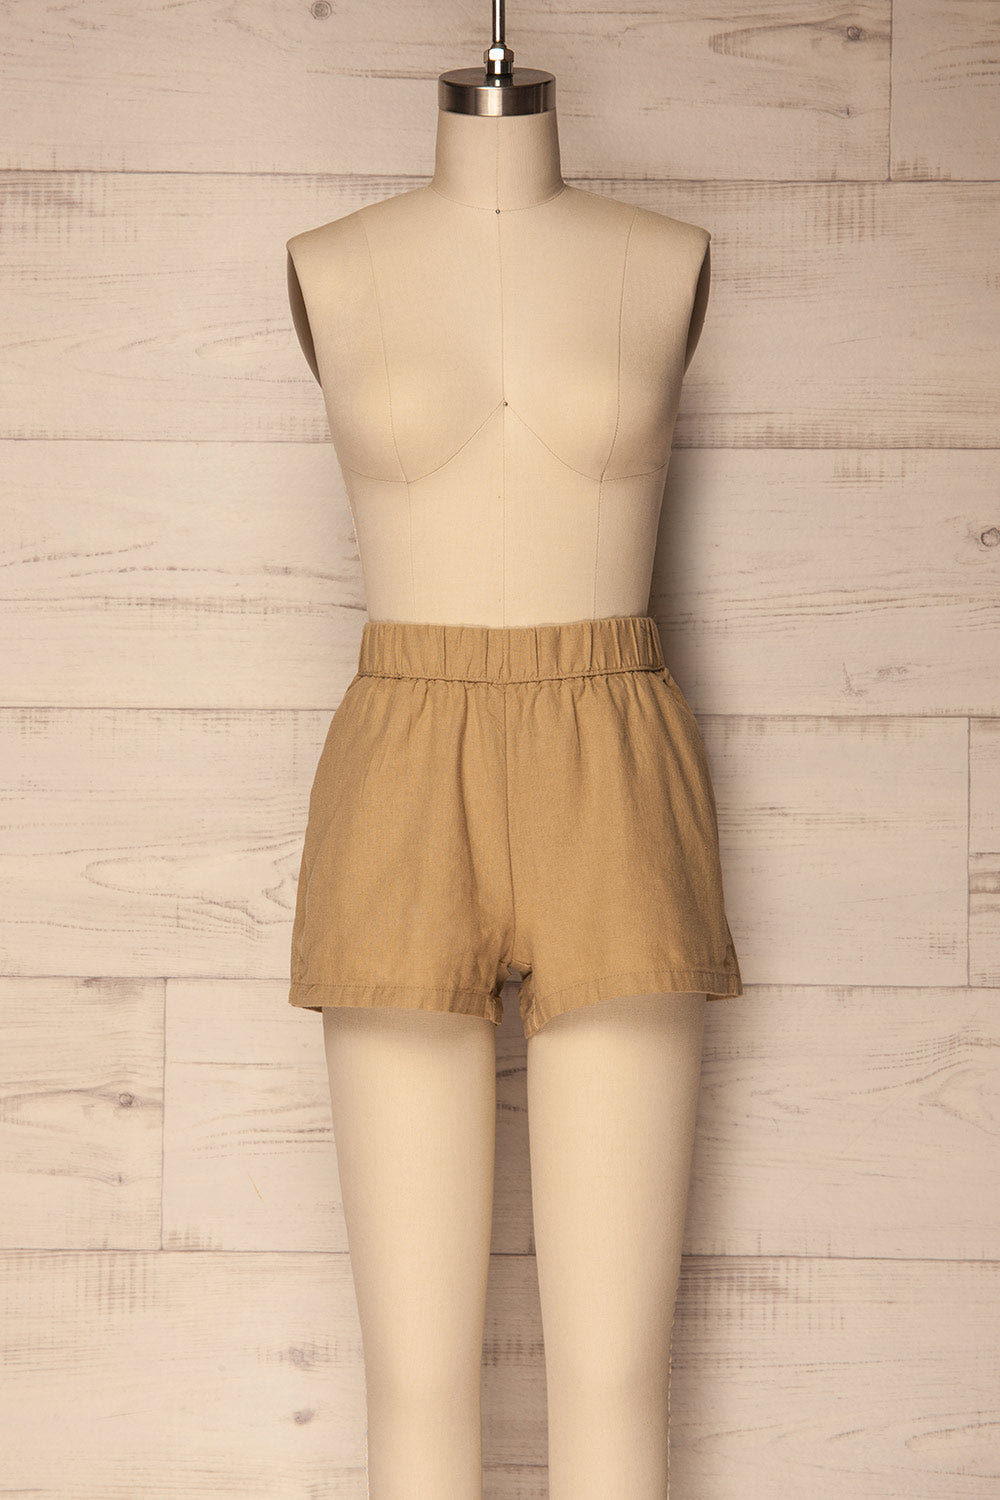 Faliro Sand Beige Linen Shorts | La Petite Garçonne